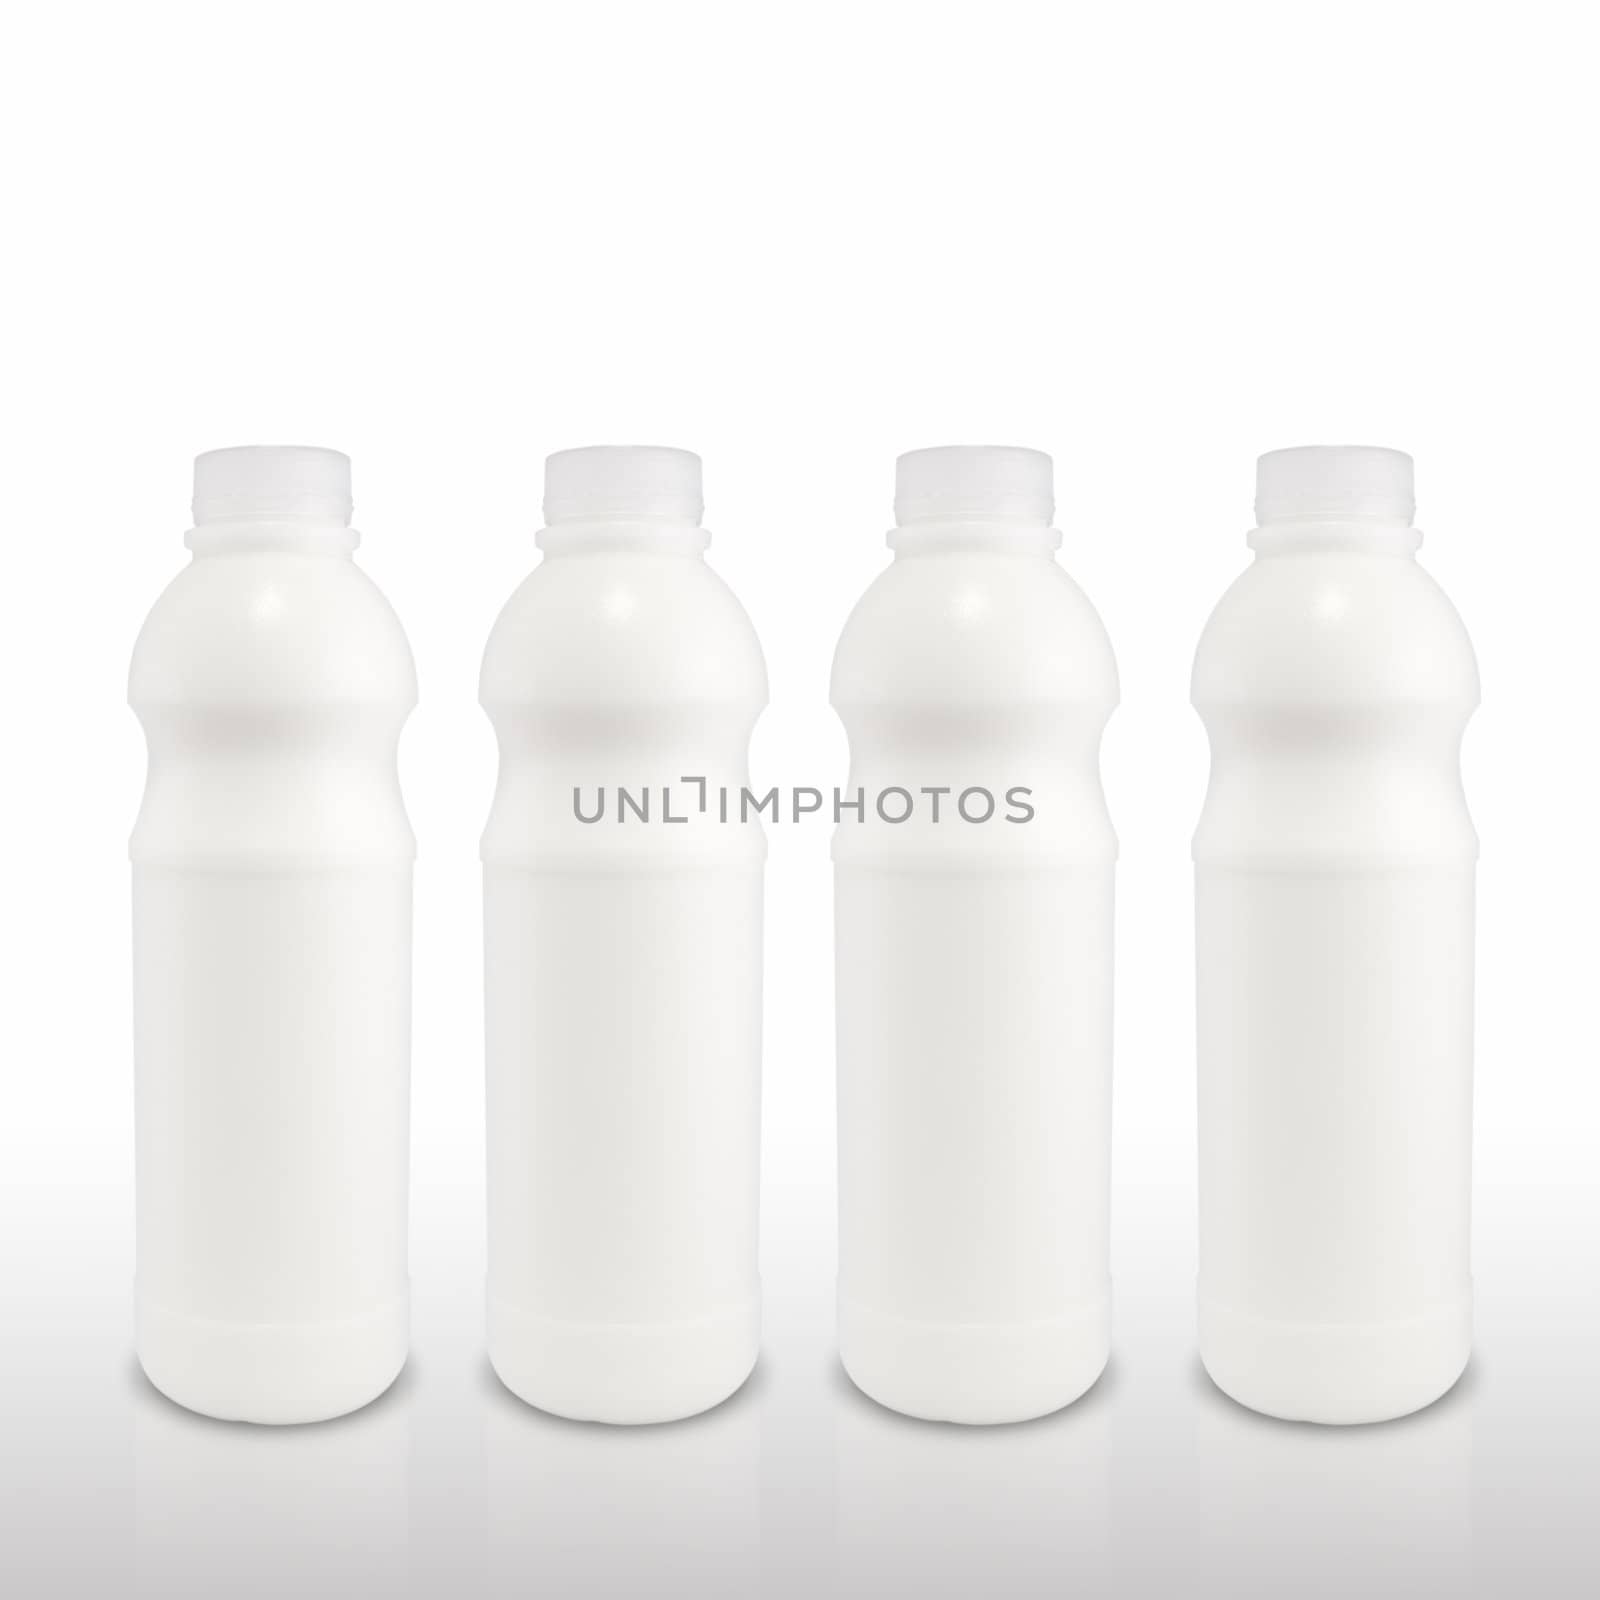 Milk in plastic bottles, Healthy drinks by pixbox77